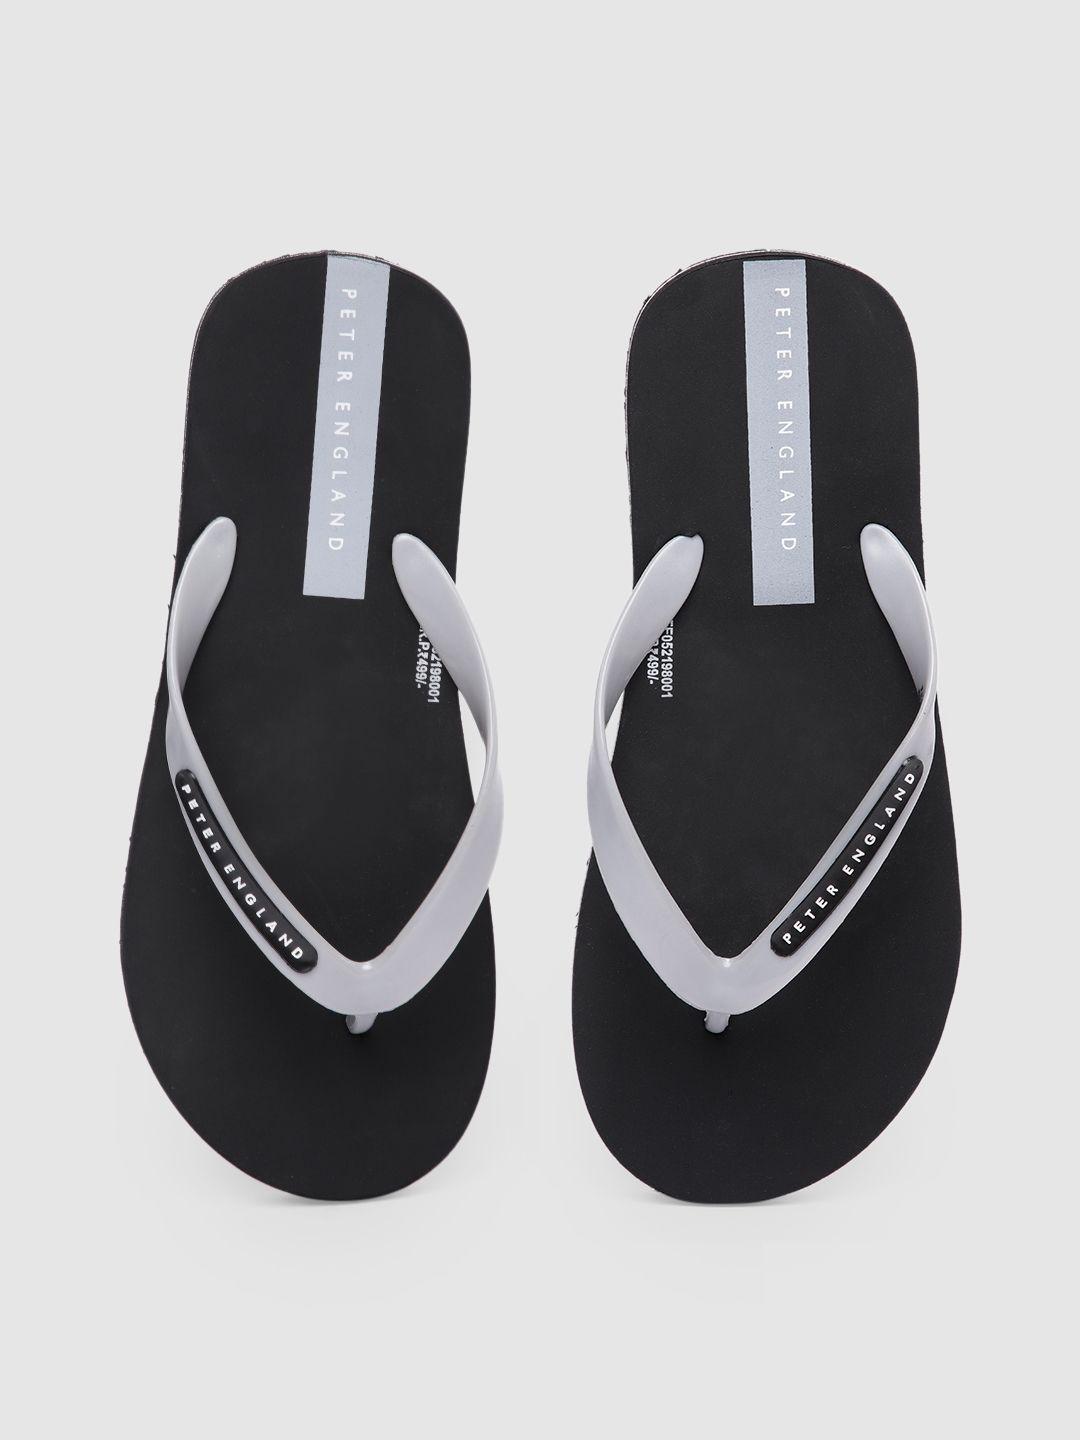 peter-england-men-black-&-grey-solid-rubber-thong-flip-flops-with-brand-logo-printed